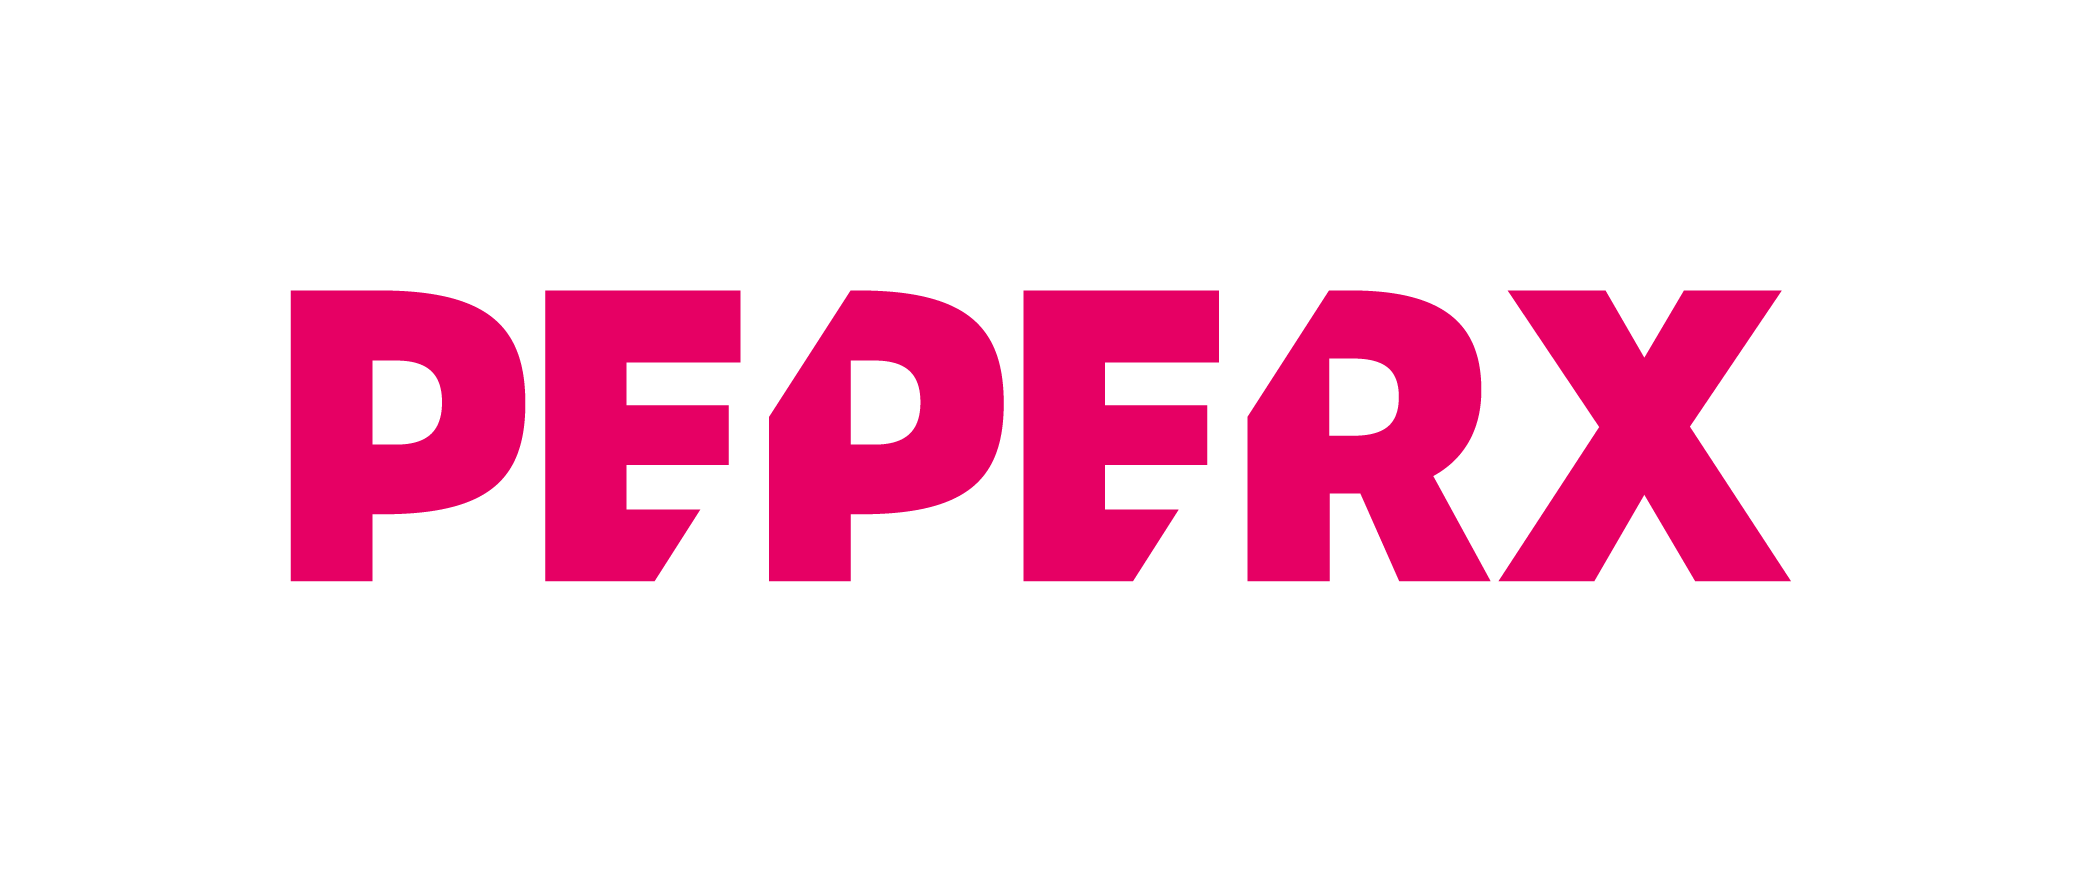 PeperX logo